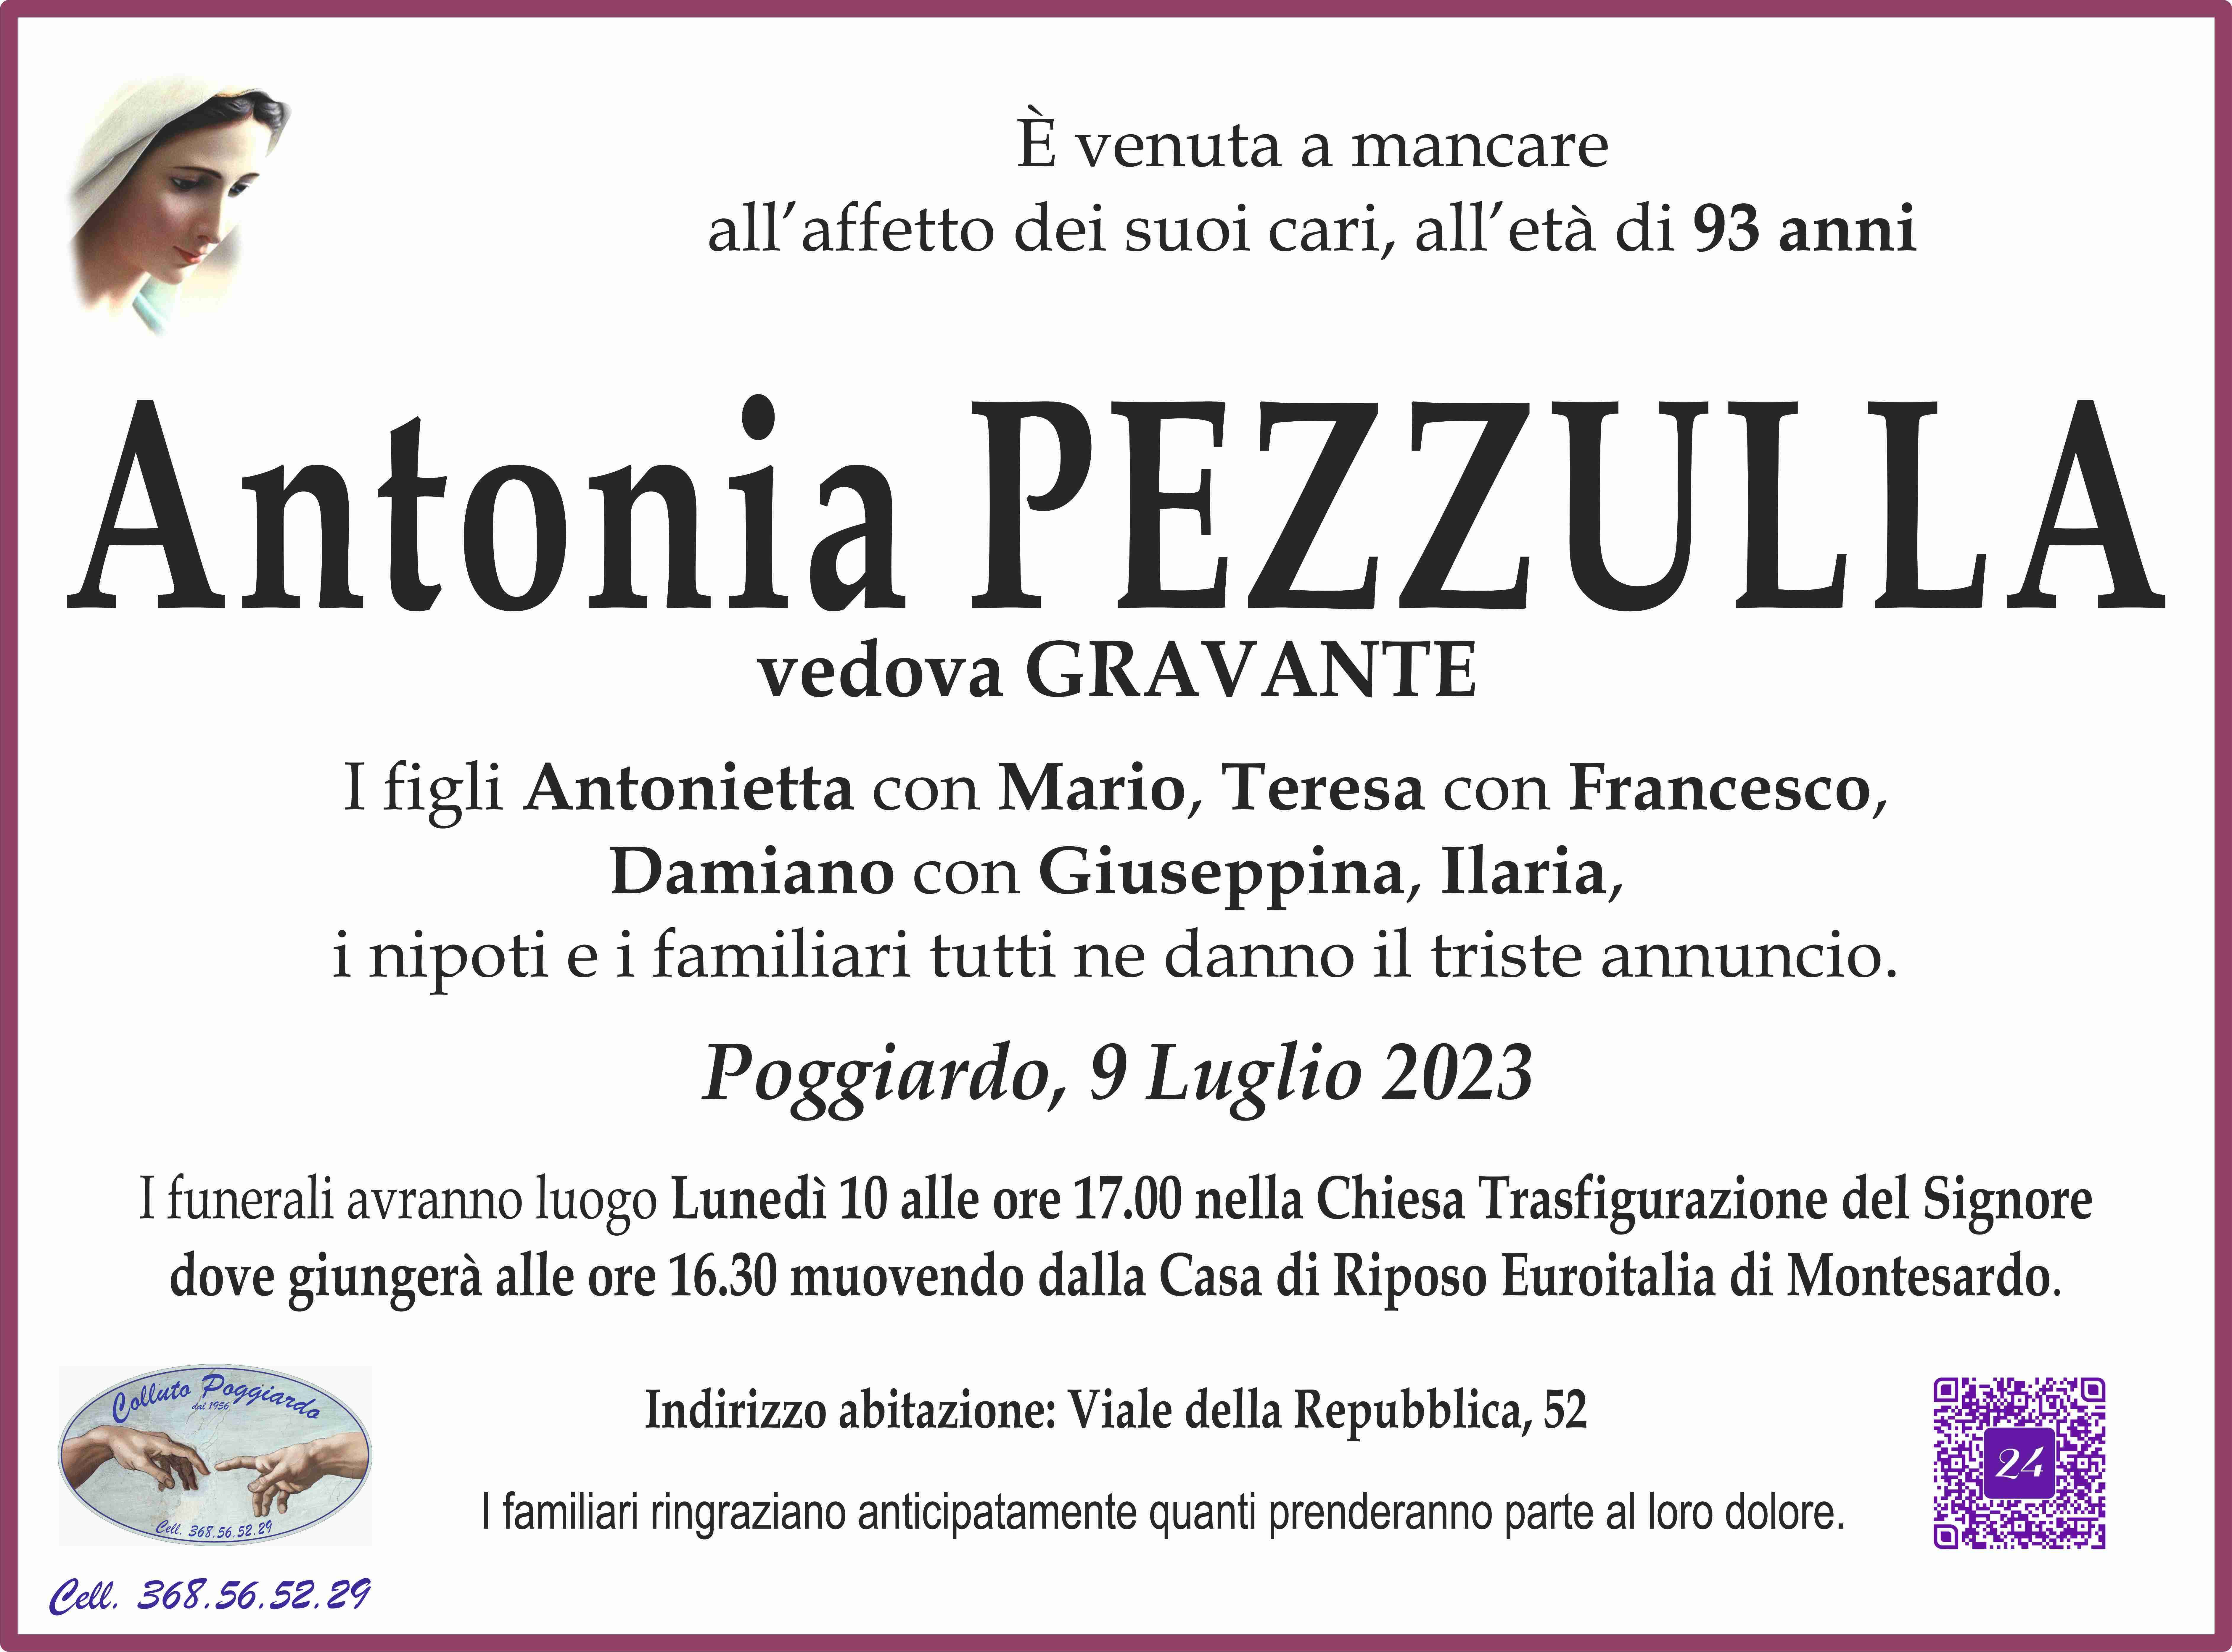 Antonia Pezzulla